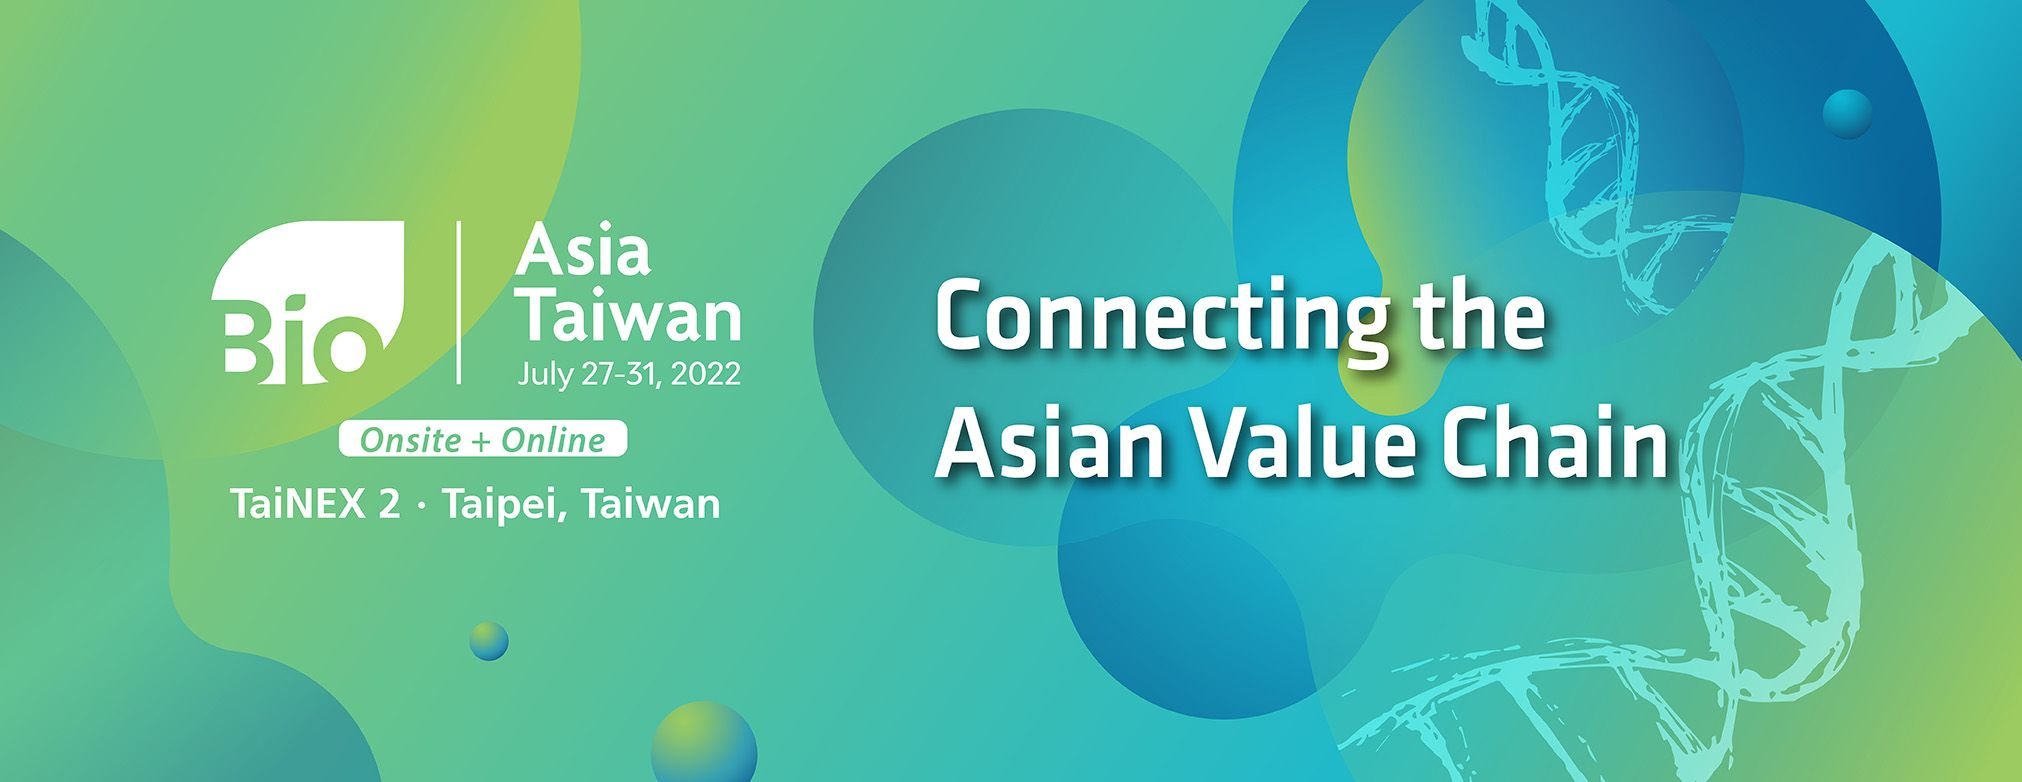 2022 BioAsia Taïwan